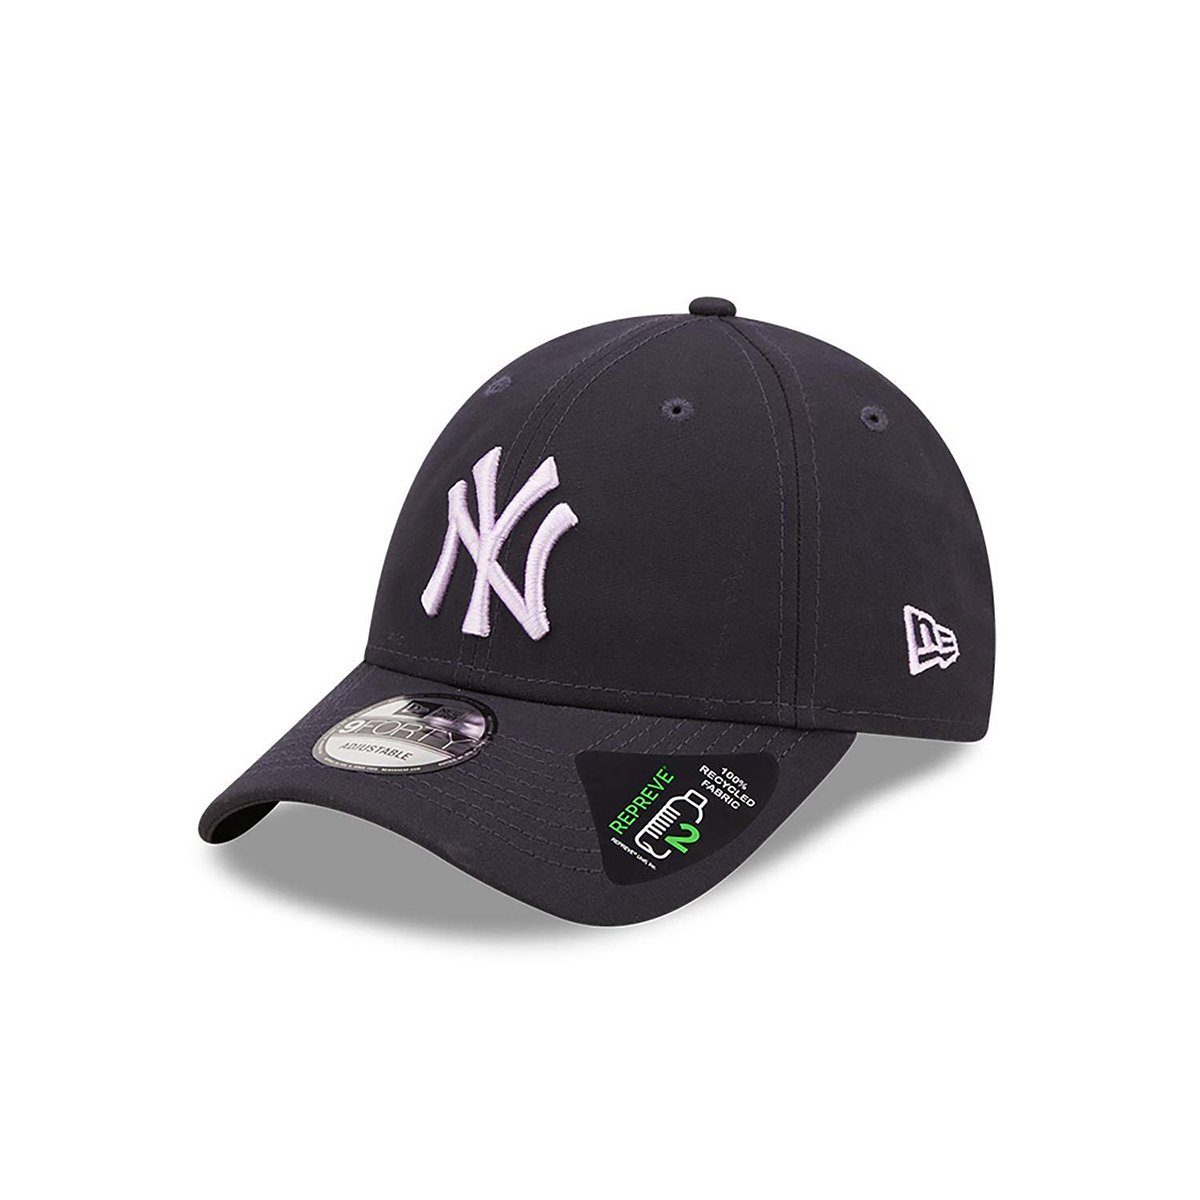 New New Baseball Yankees Cap Era York